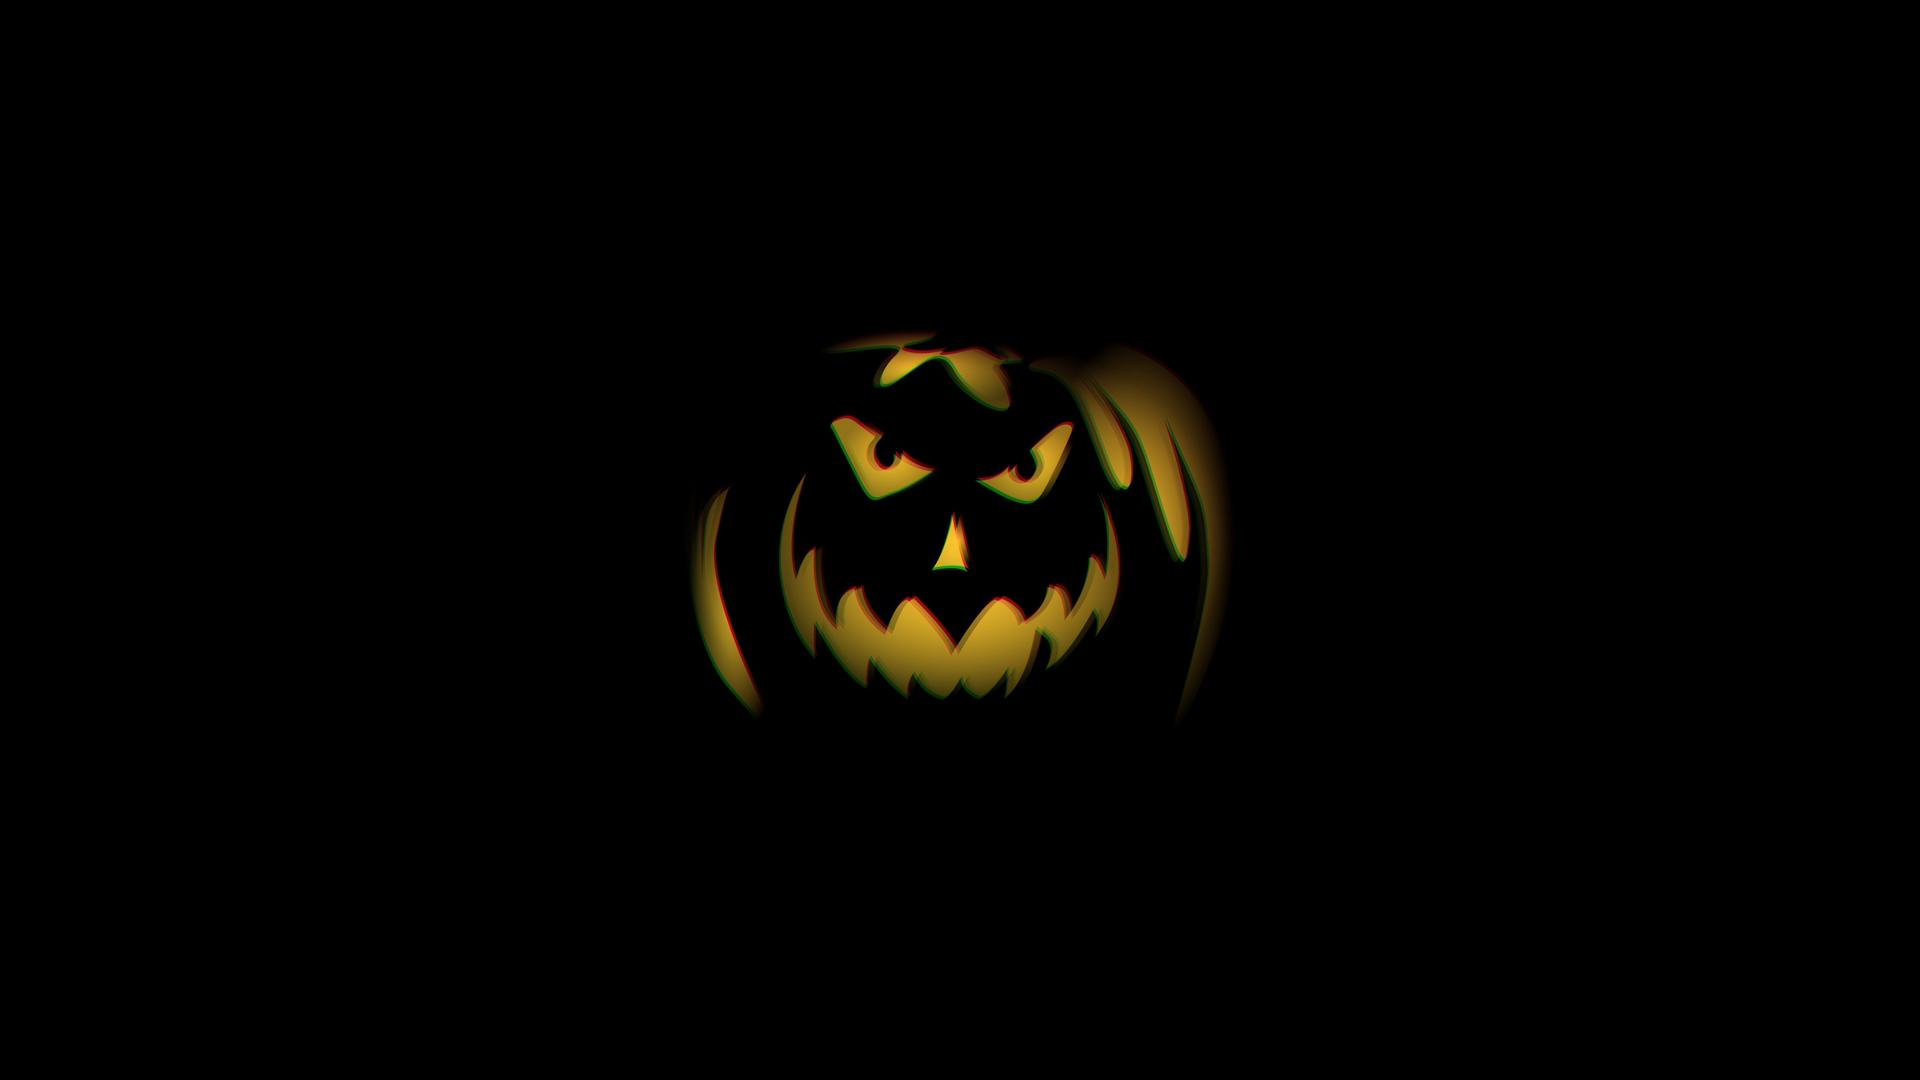 Download wallpaper 1920x1080 jack o lantern, halloween